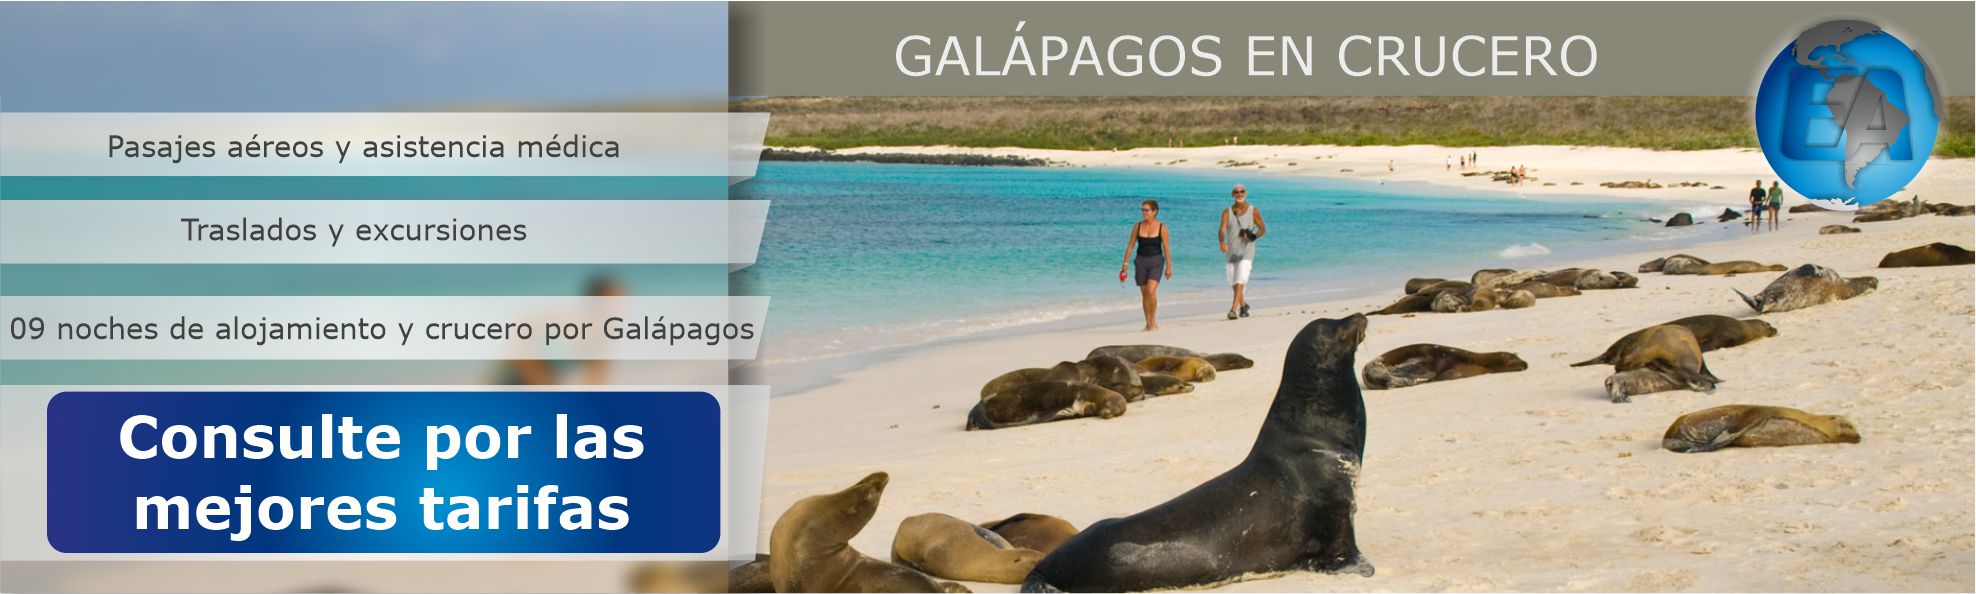 Galápagos en crucero